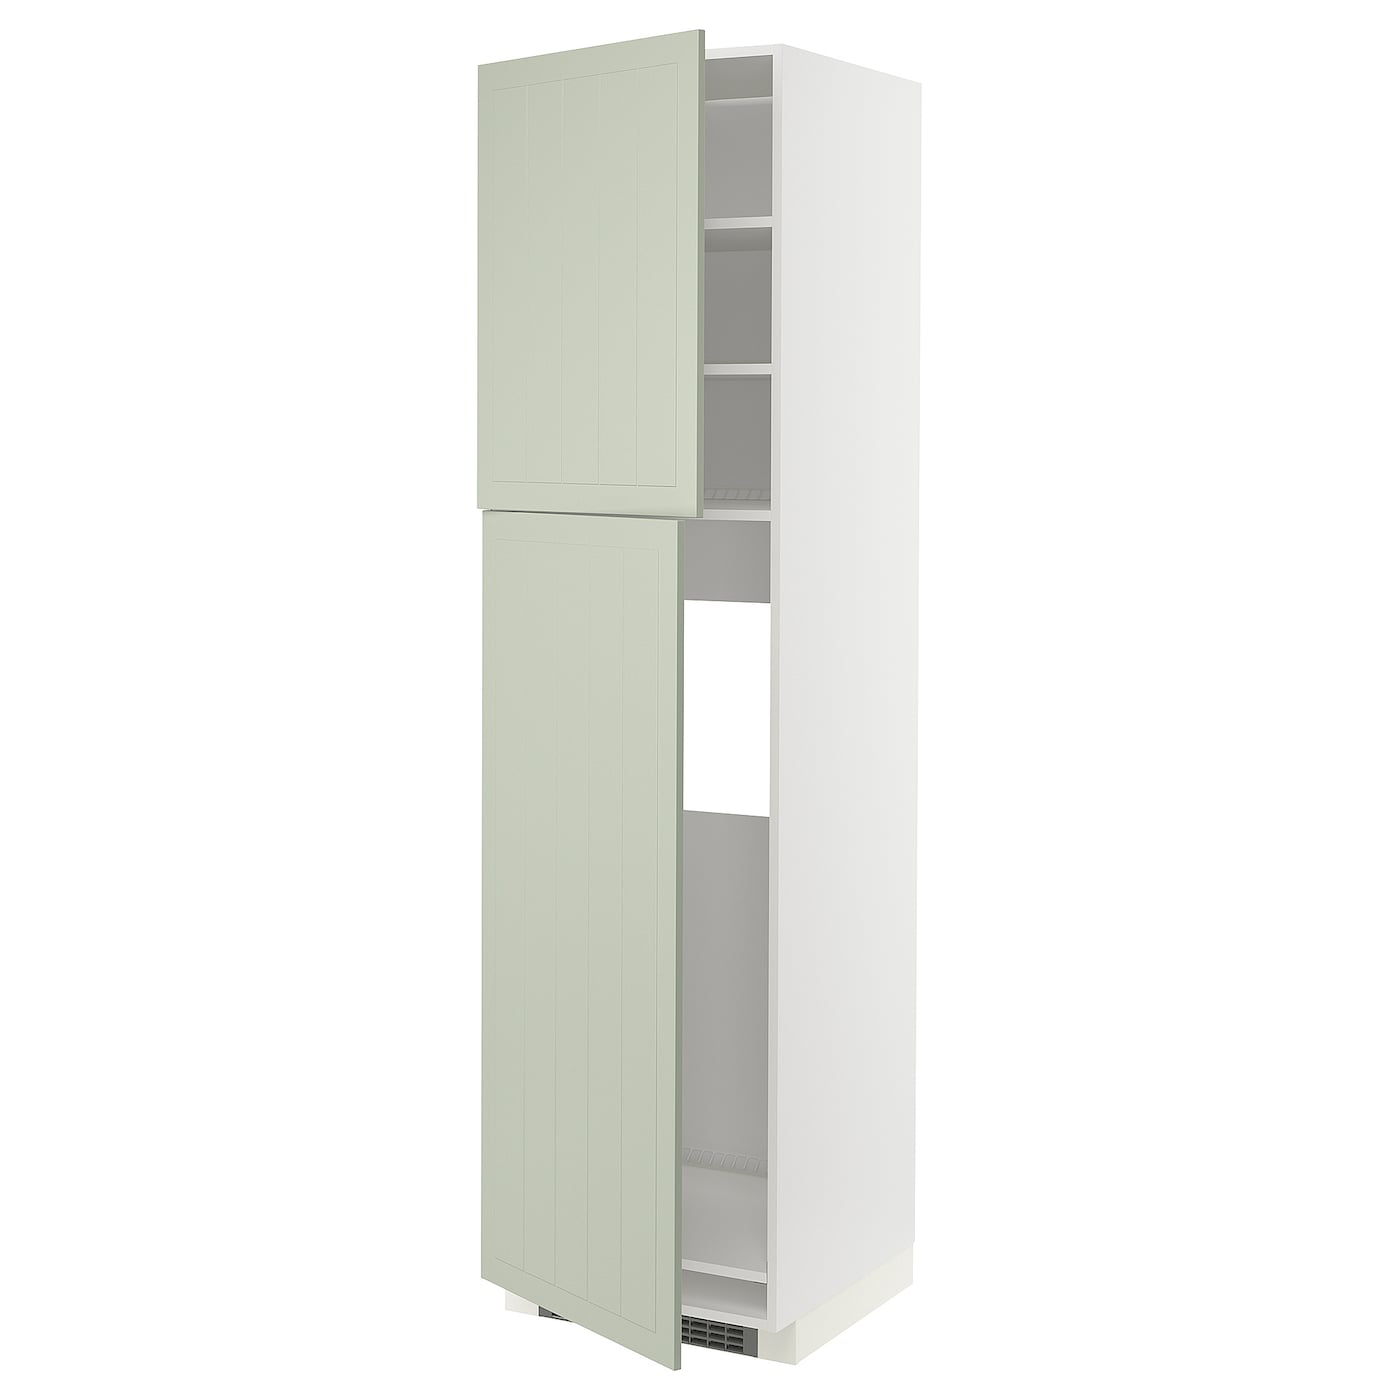 Высокий кухонный шкаф - IKEA METOD/МЕТОД ИКЕА, 220х60х60 см, белый/зеленый